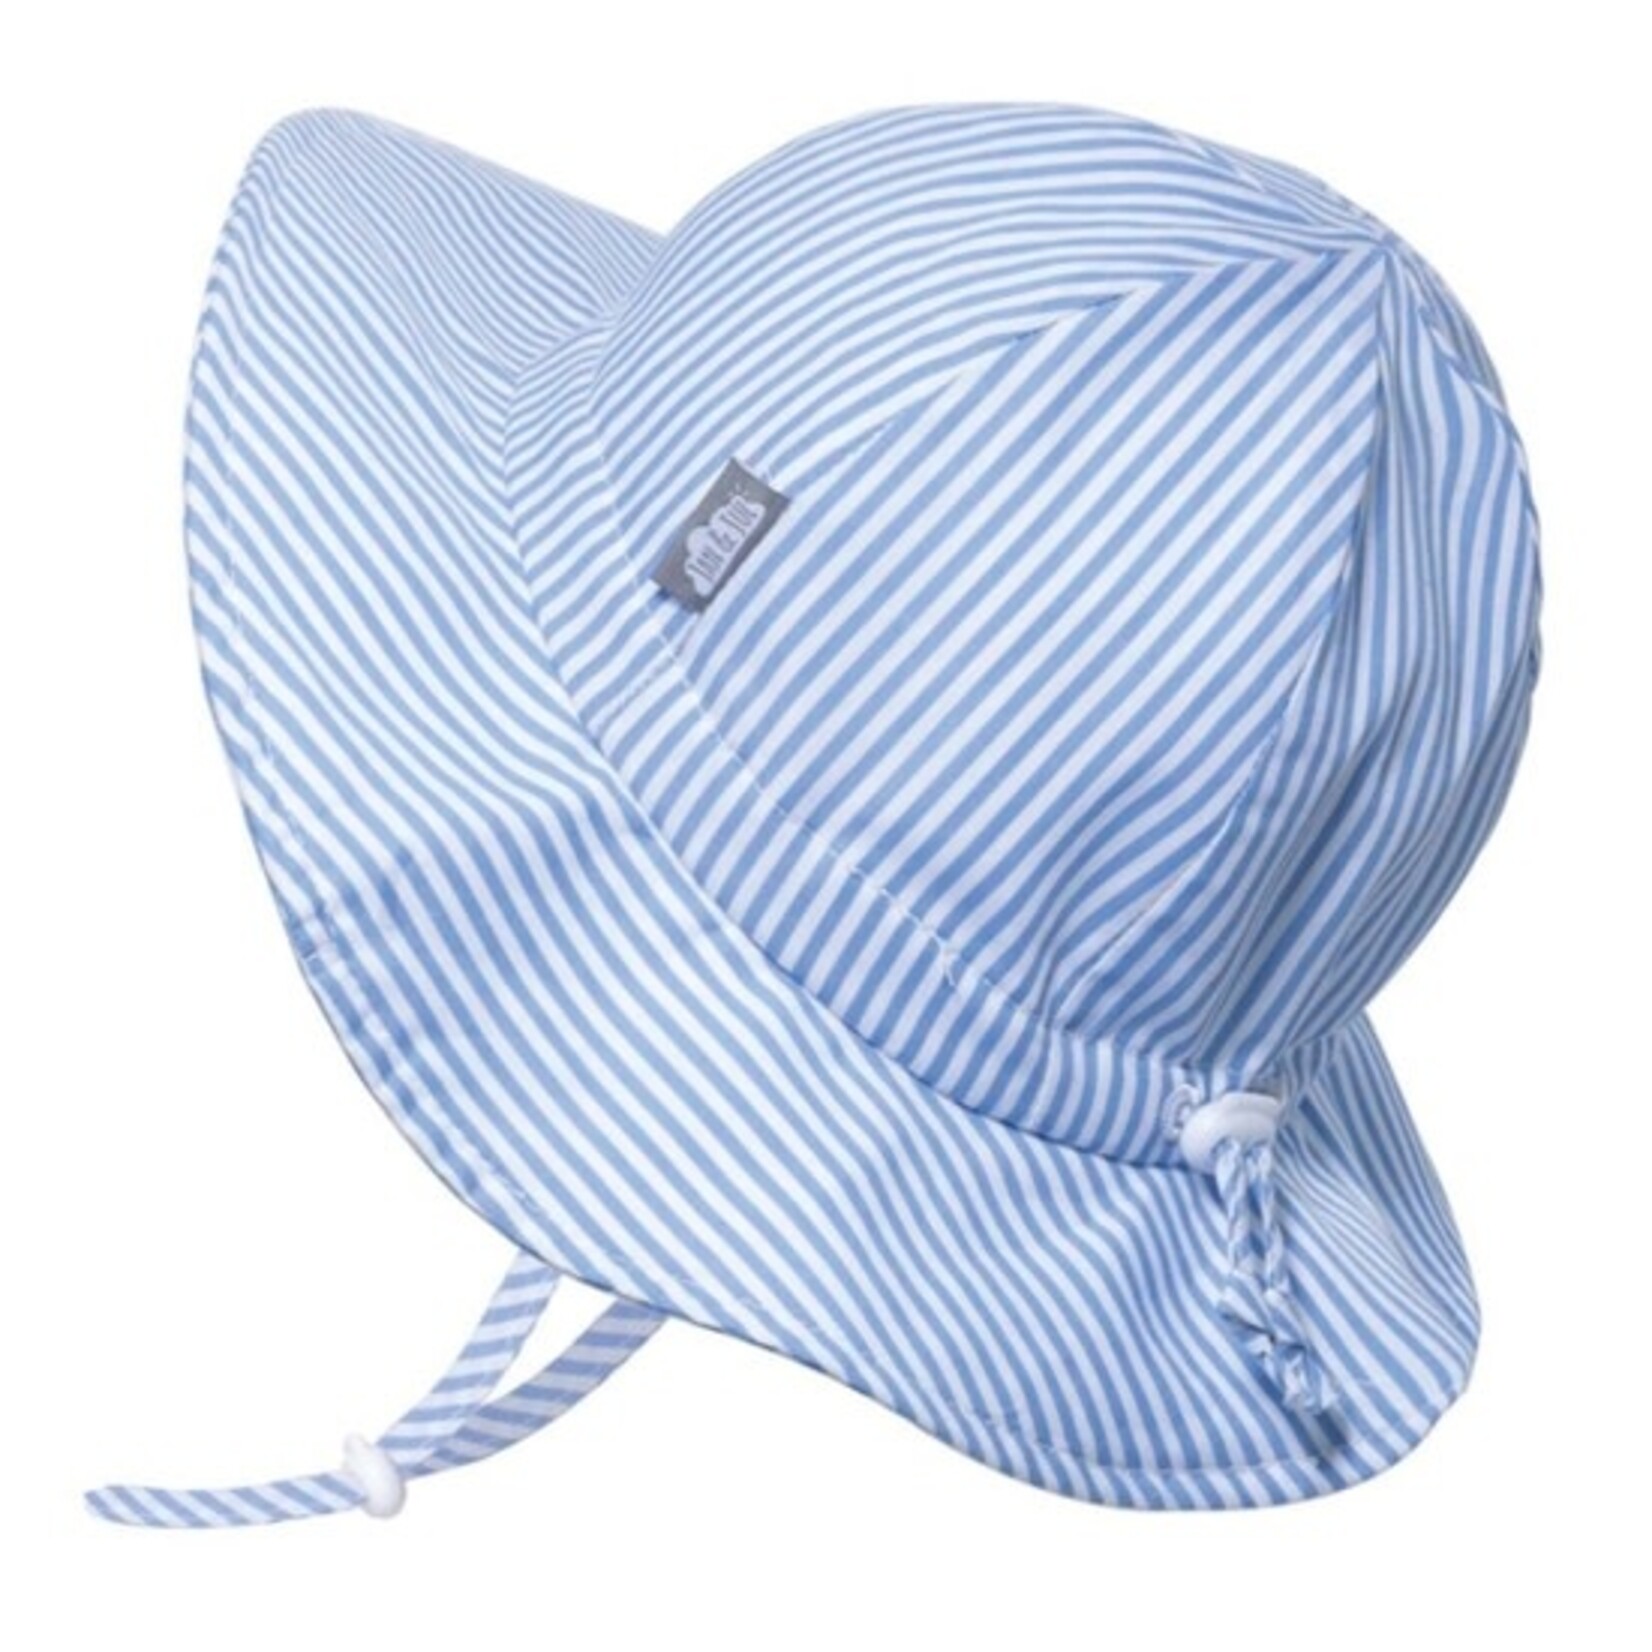 Jan & Jul Cotton Floppy Sun Hat - Blue Stripes